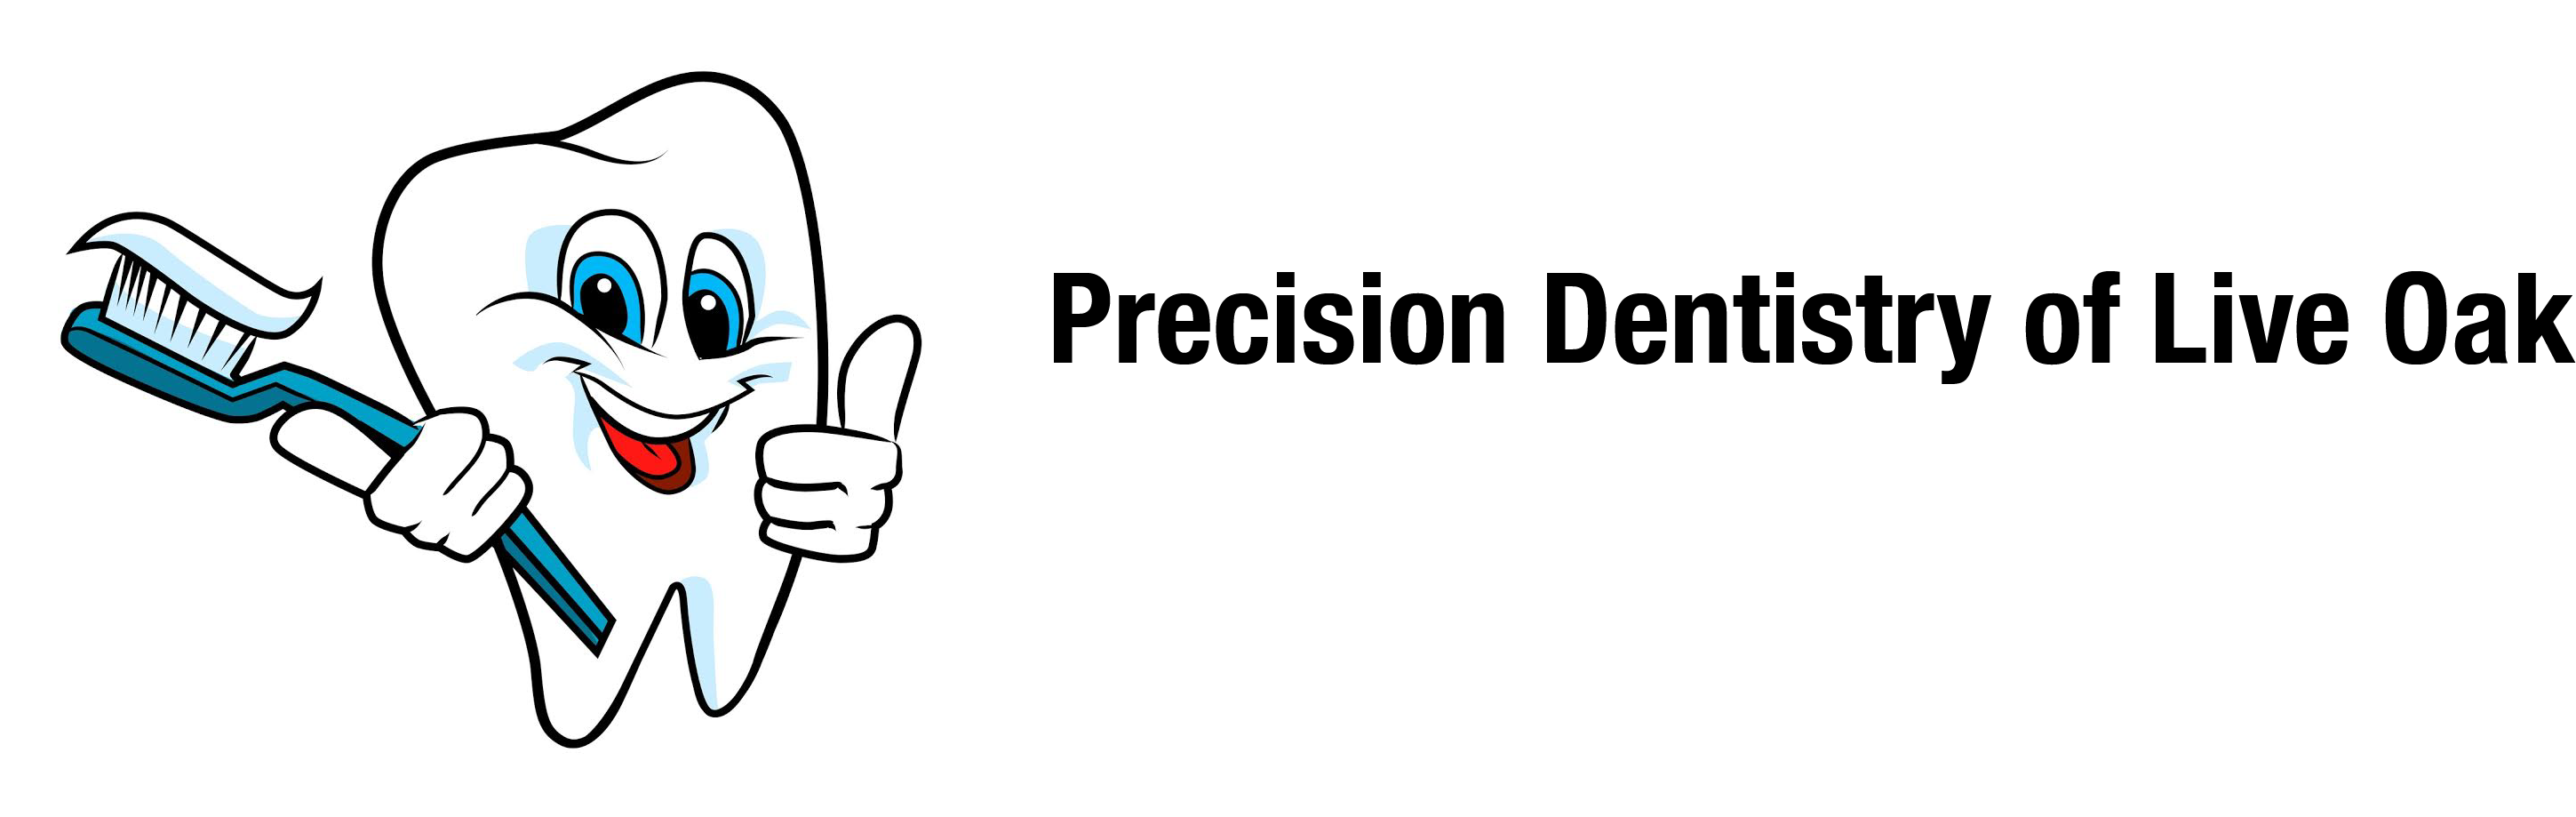 Company logo of Precision Dentistry of Live Oak